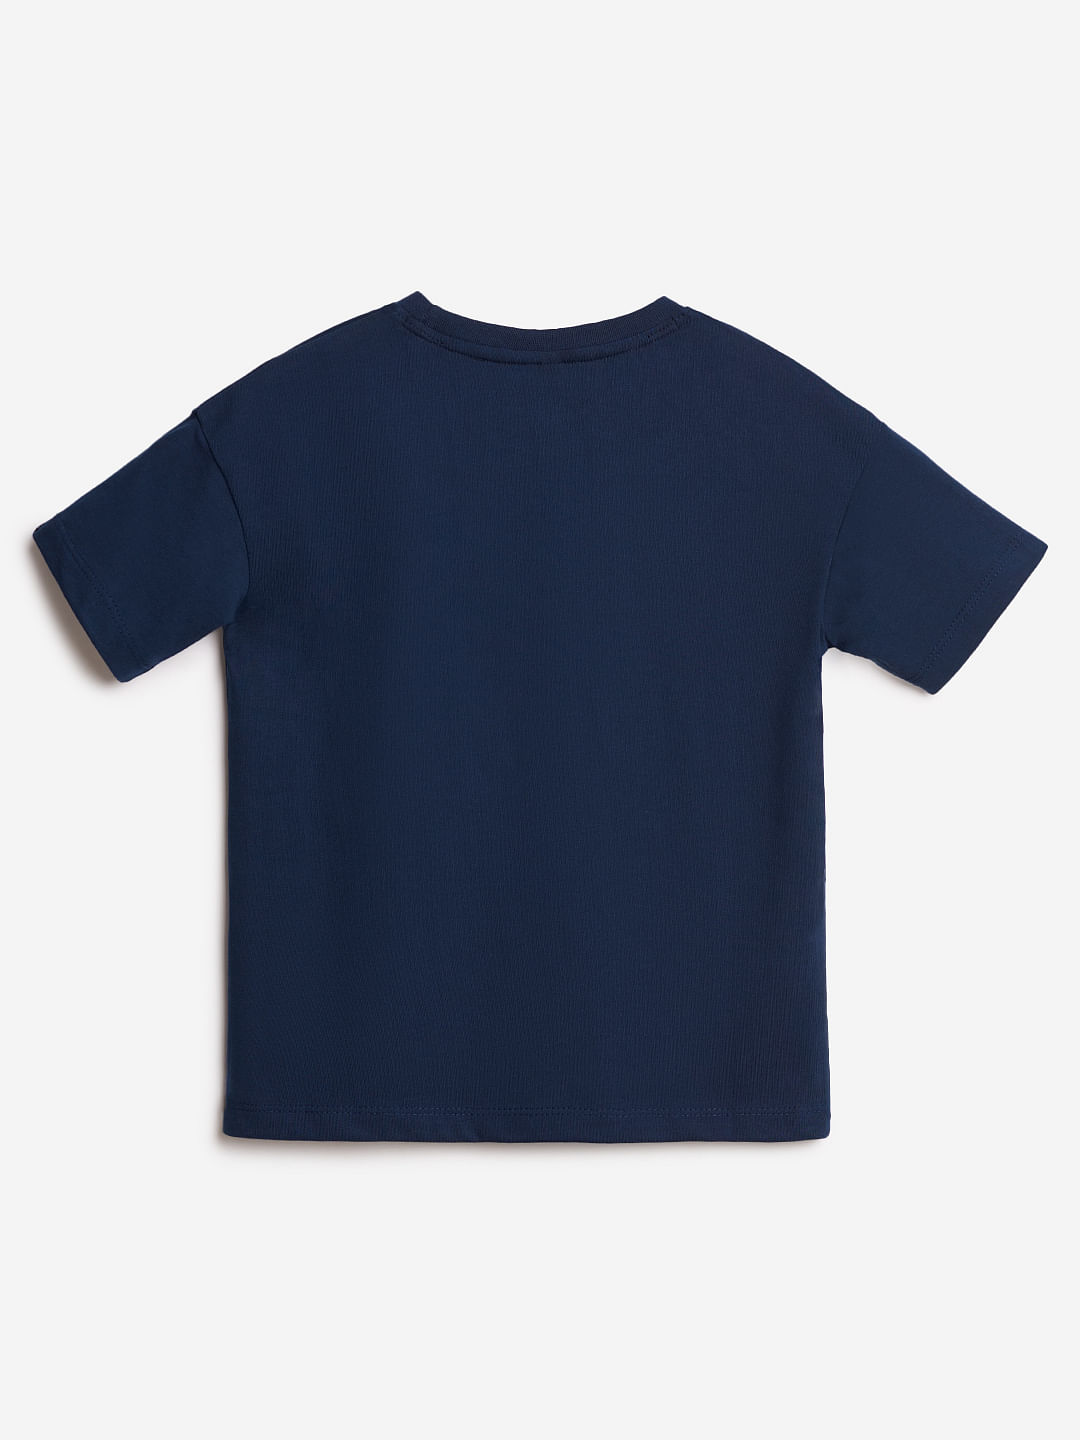 Buy Lilo & Stitch: Cute Face Girls Oversized T-Shirts Online